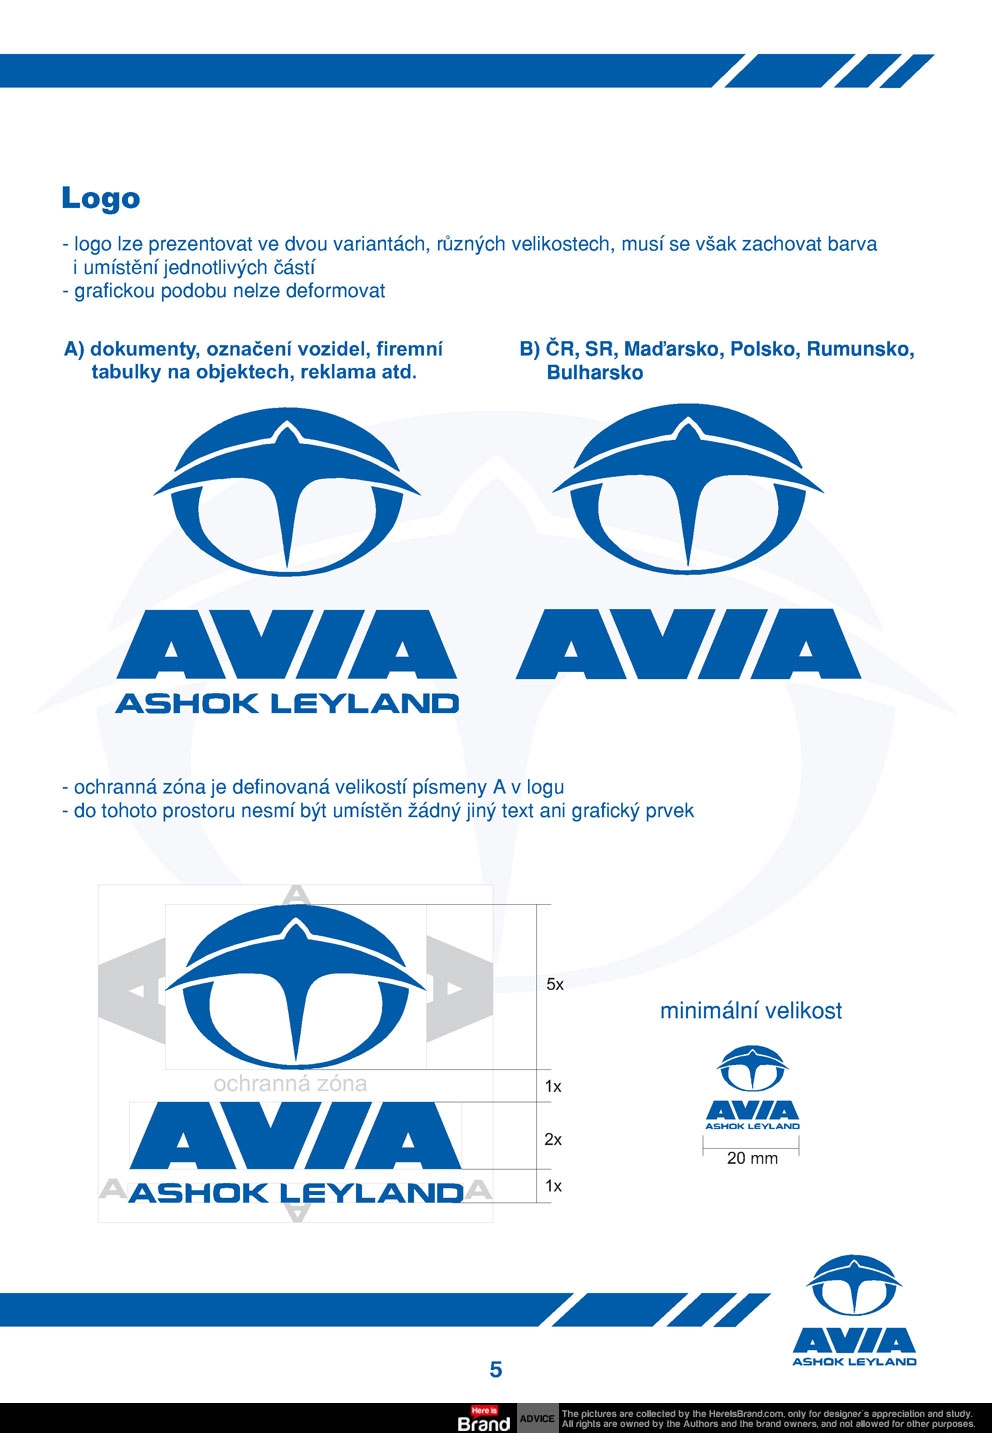 AVIA Ashok Leyland corporate manual